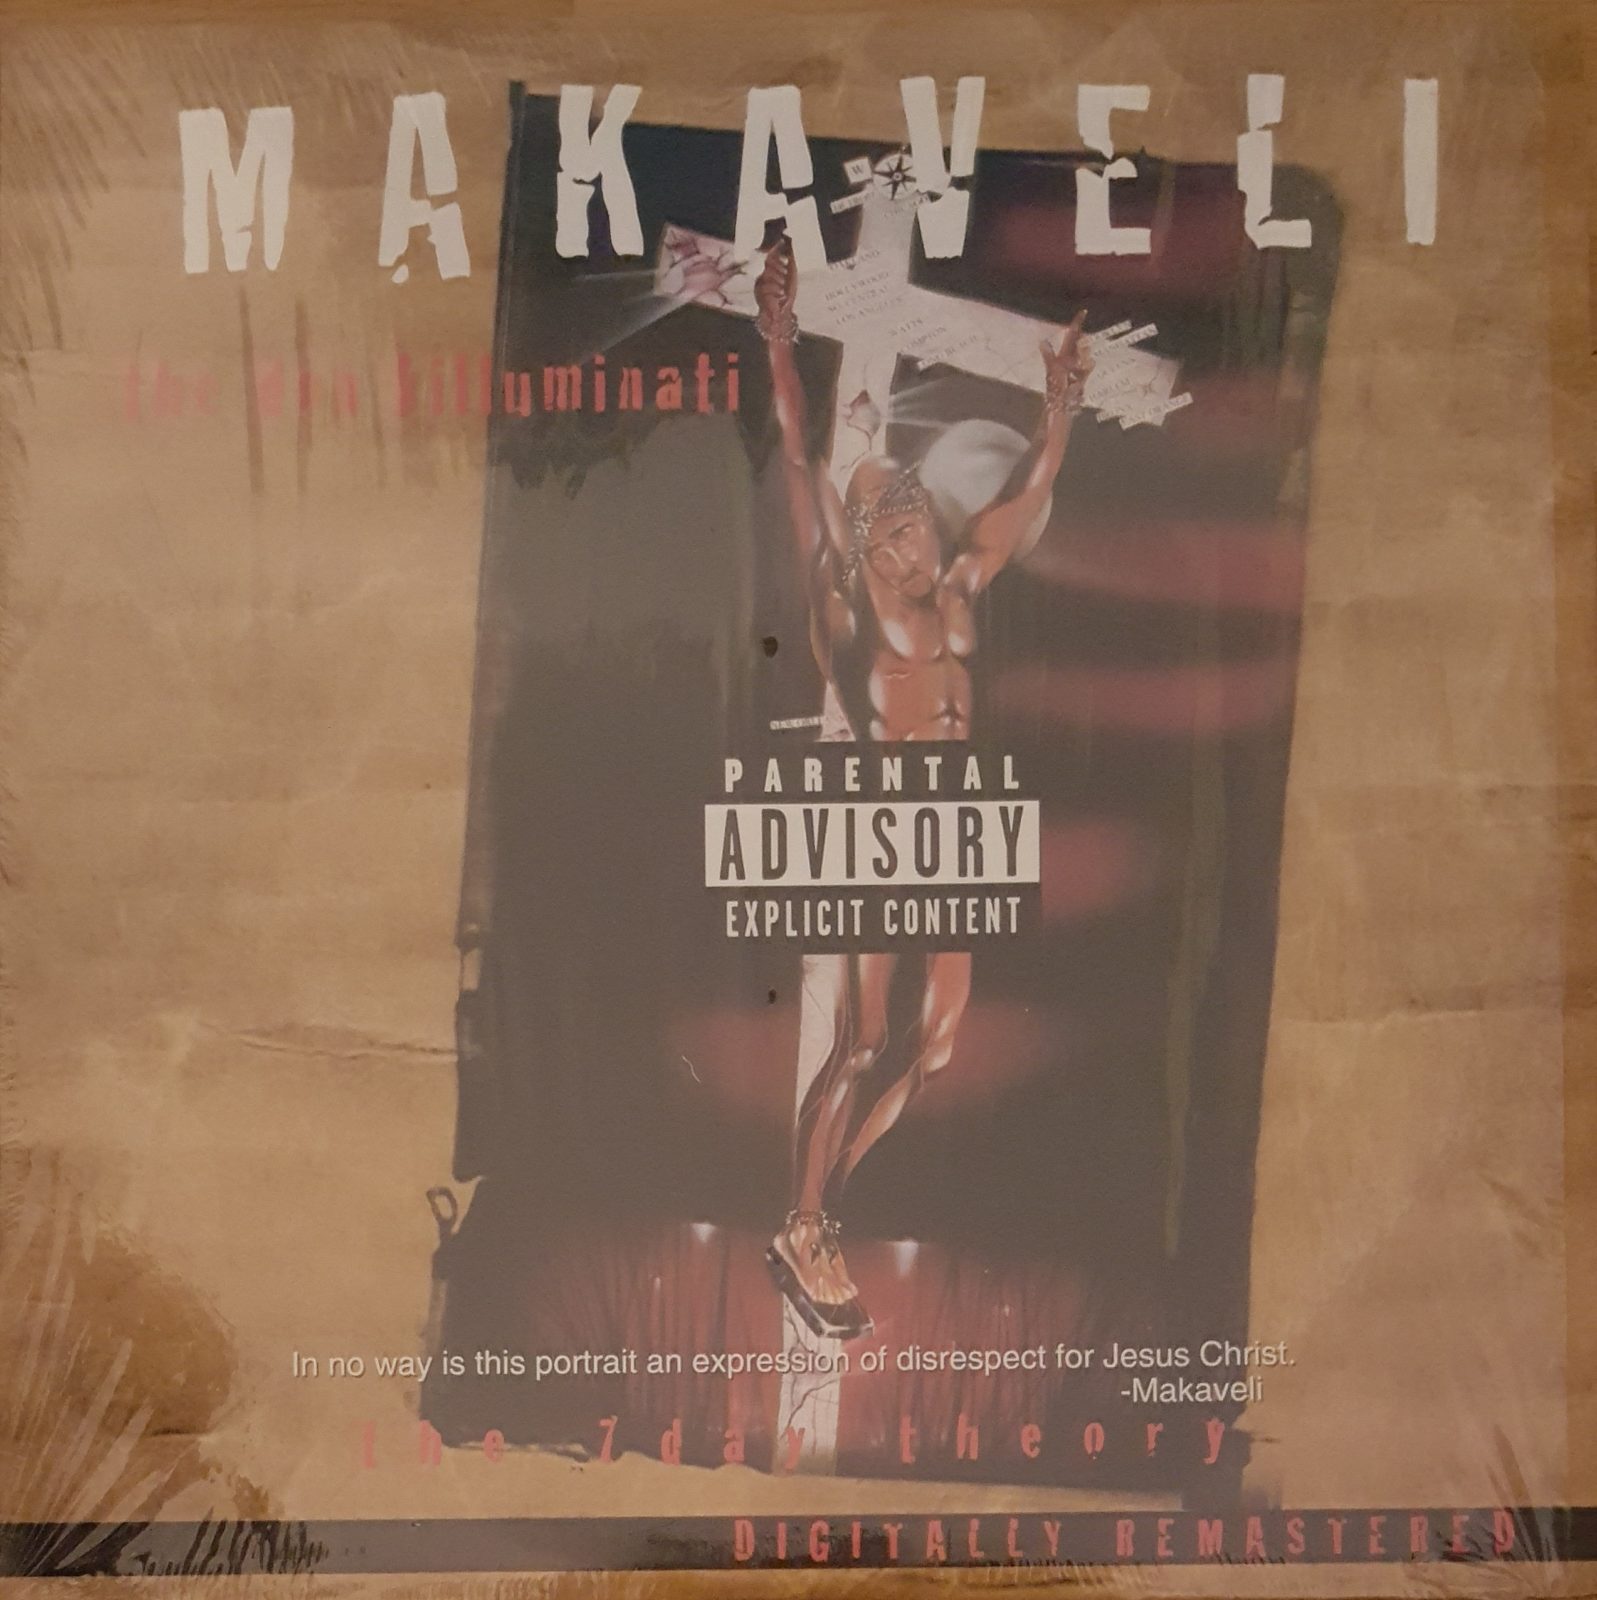 tupac makaveli album download free